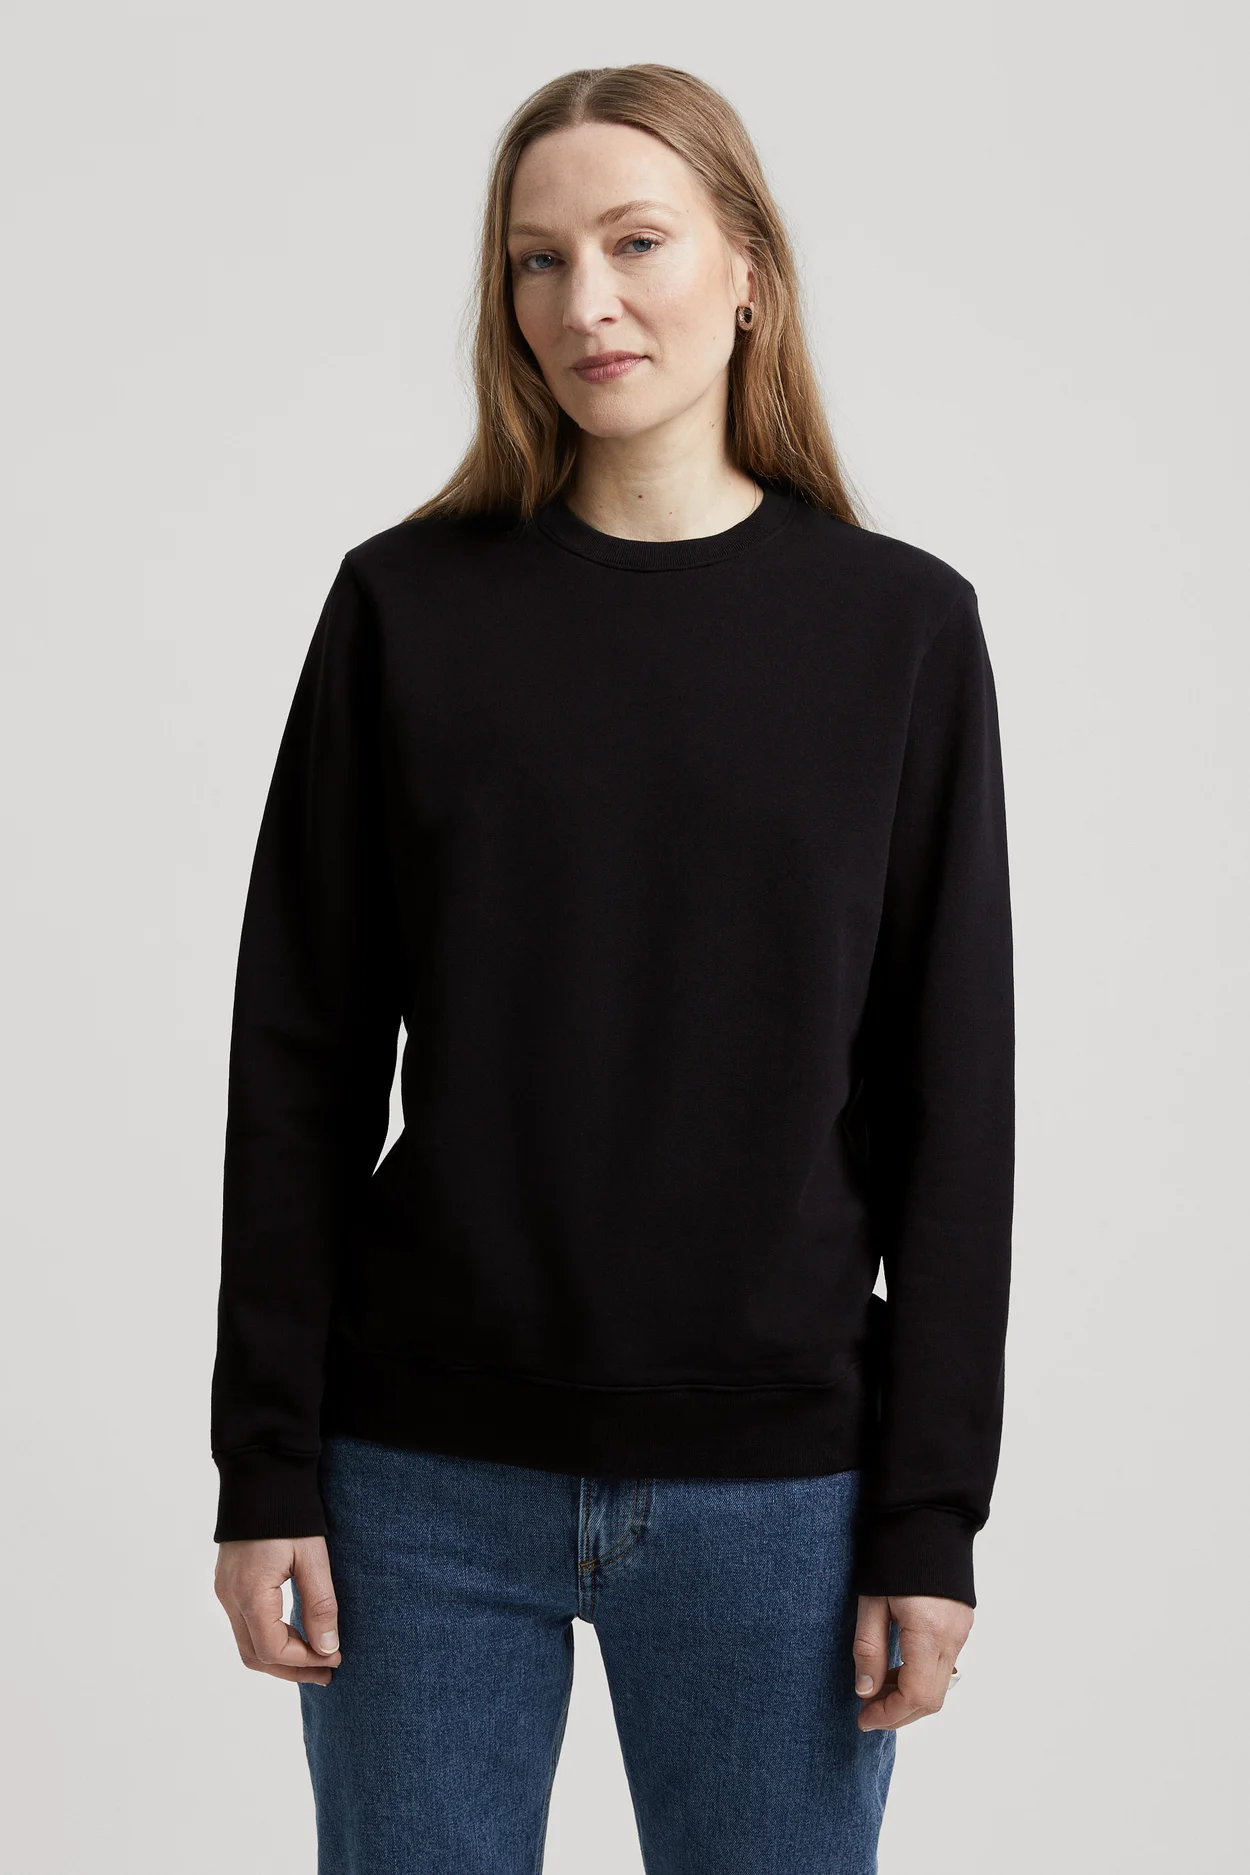 Women's Sweatshirts | Made From 100% Organic Cotton